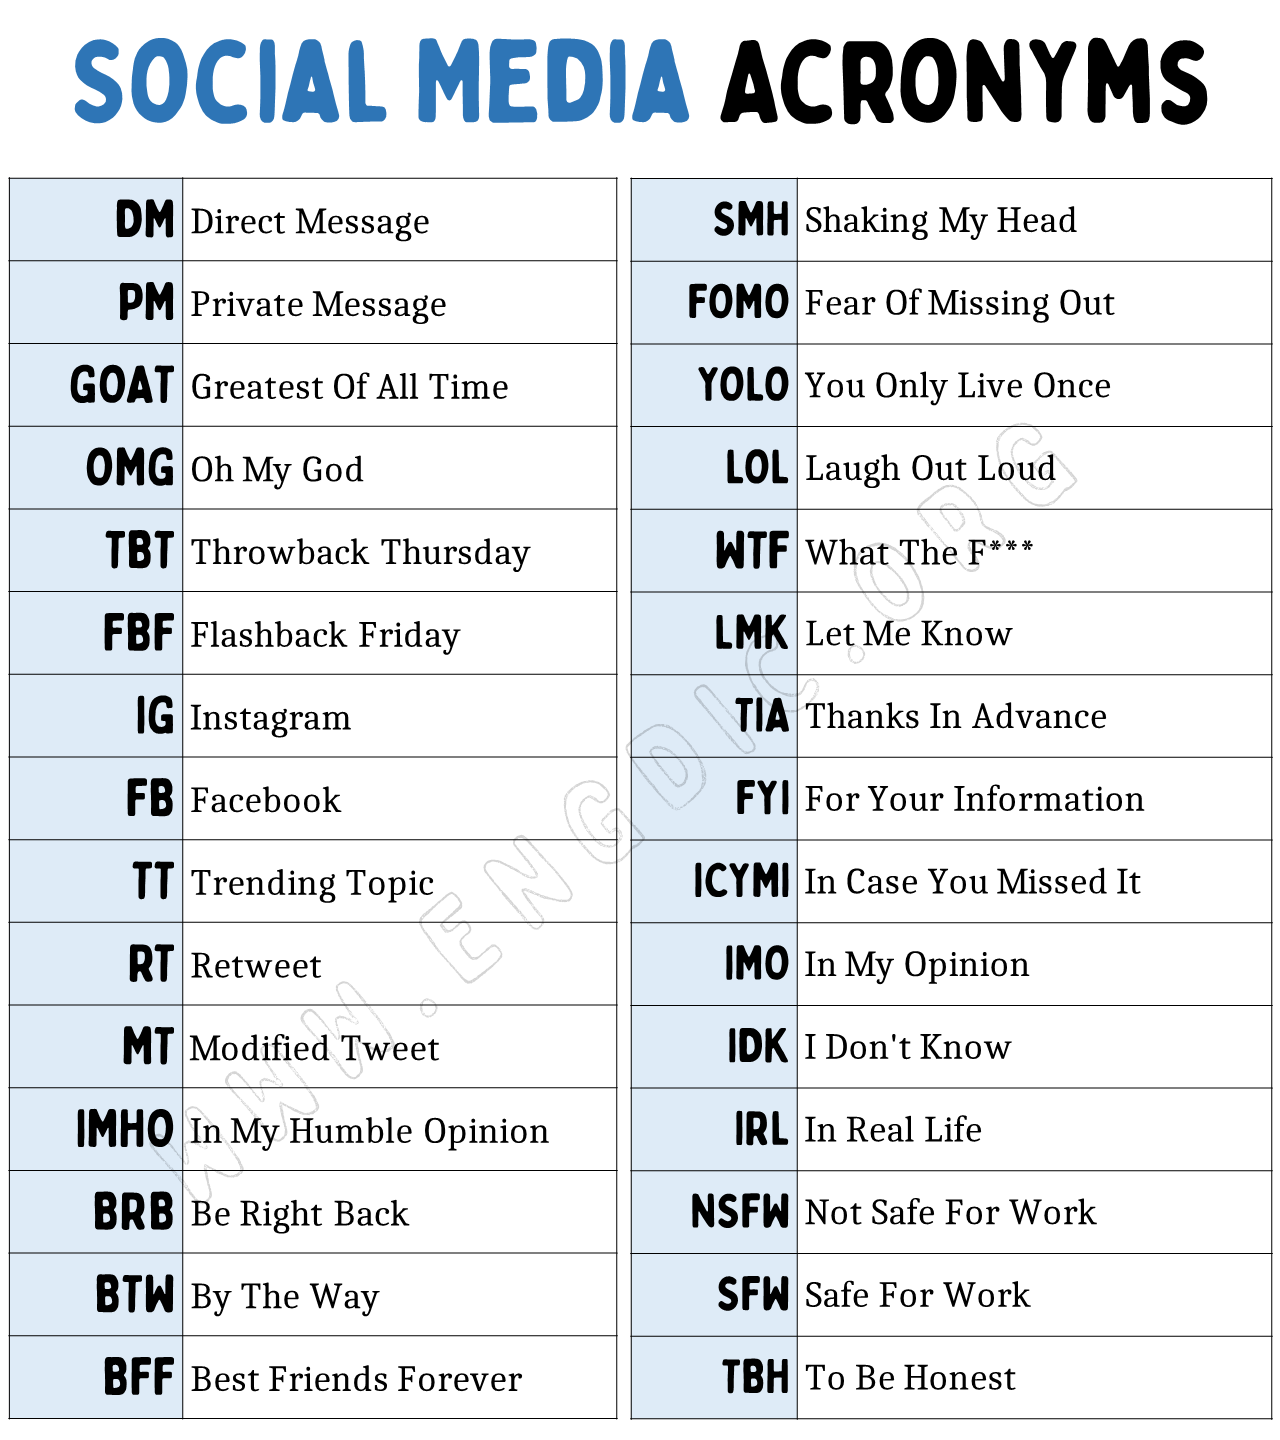 Social Media Acronyms